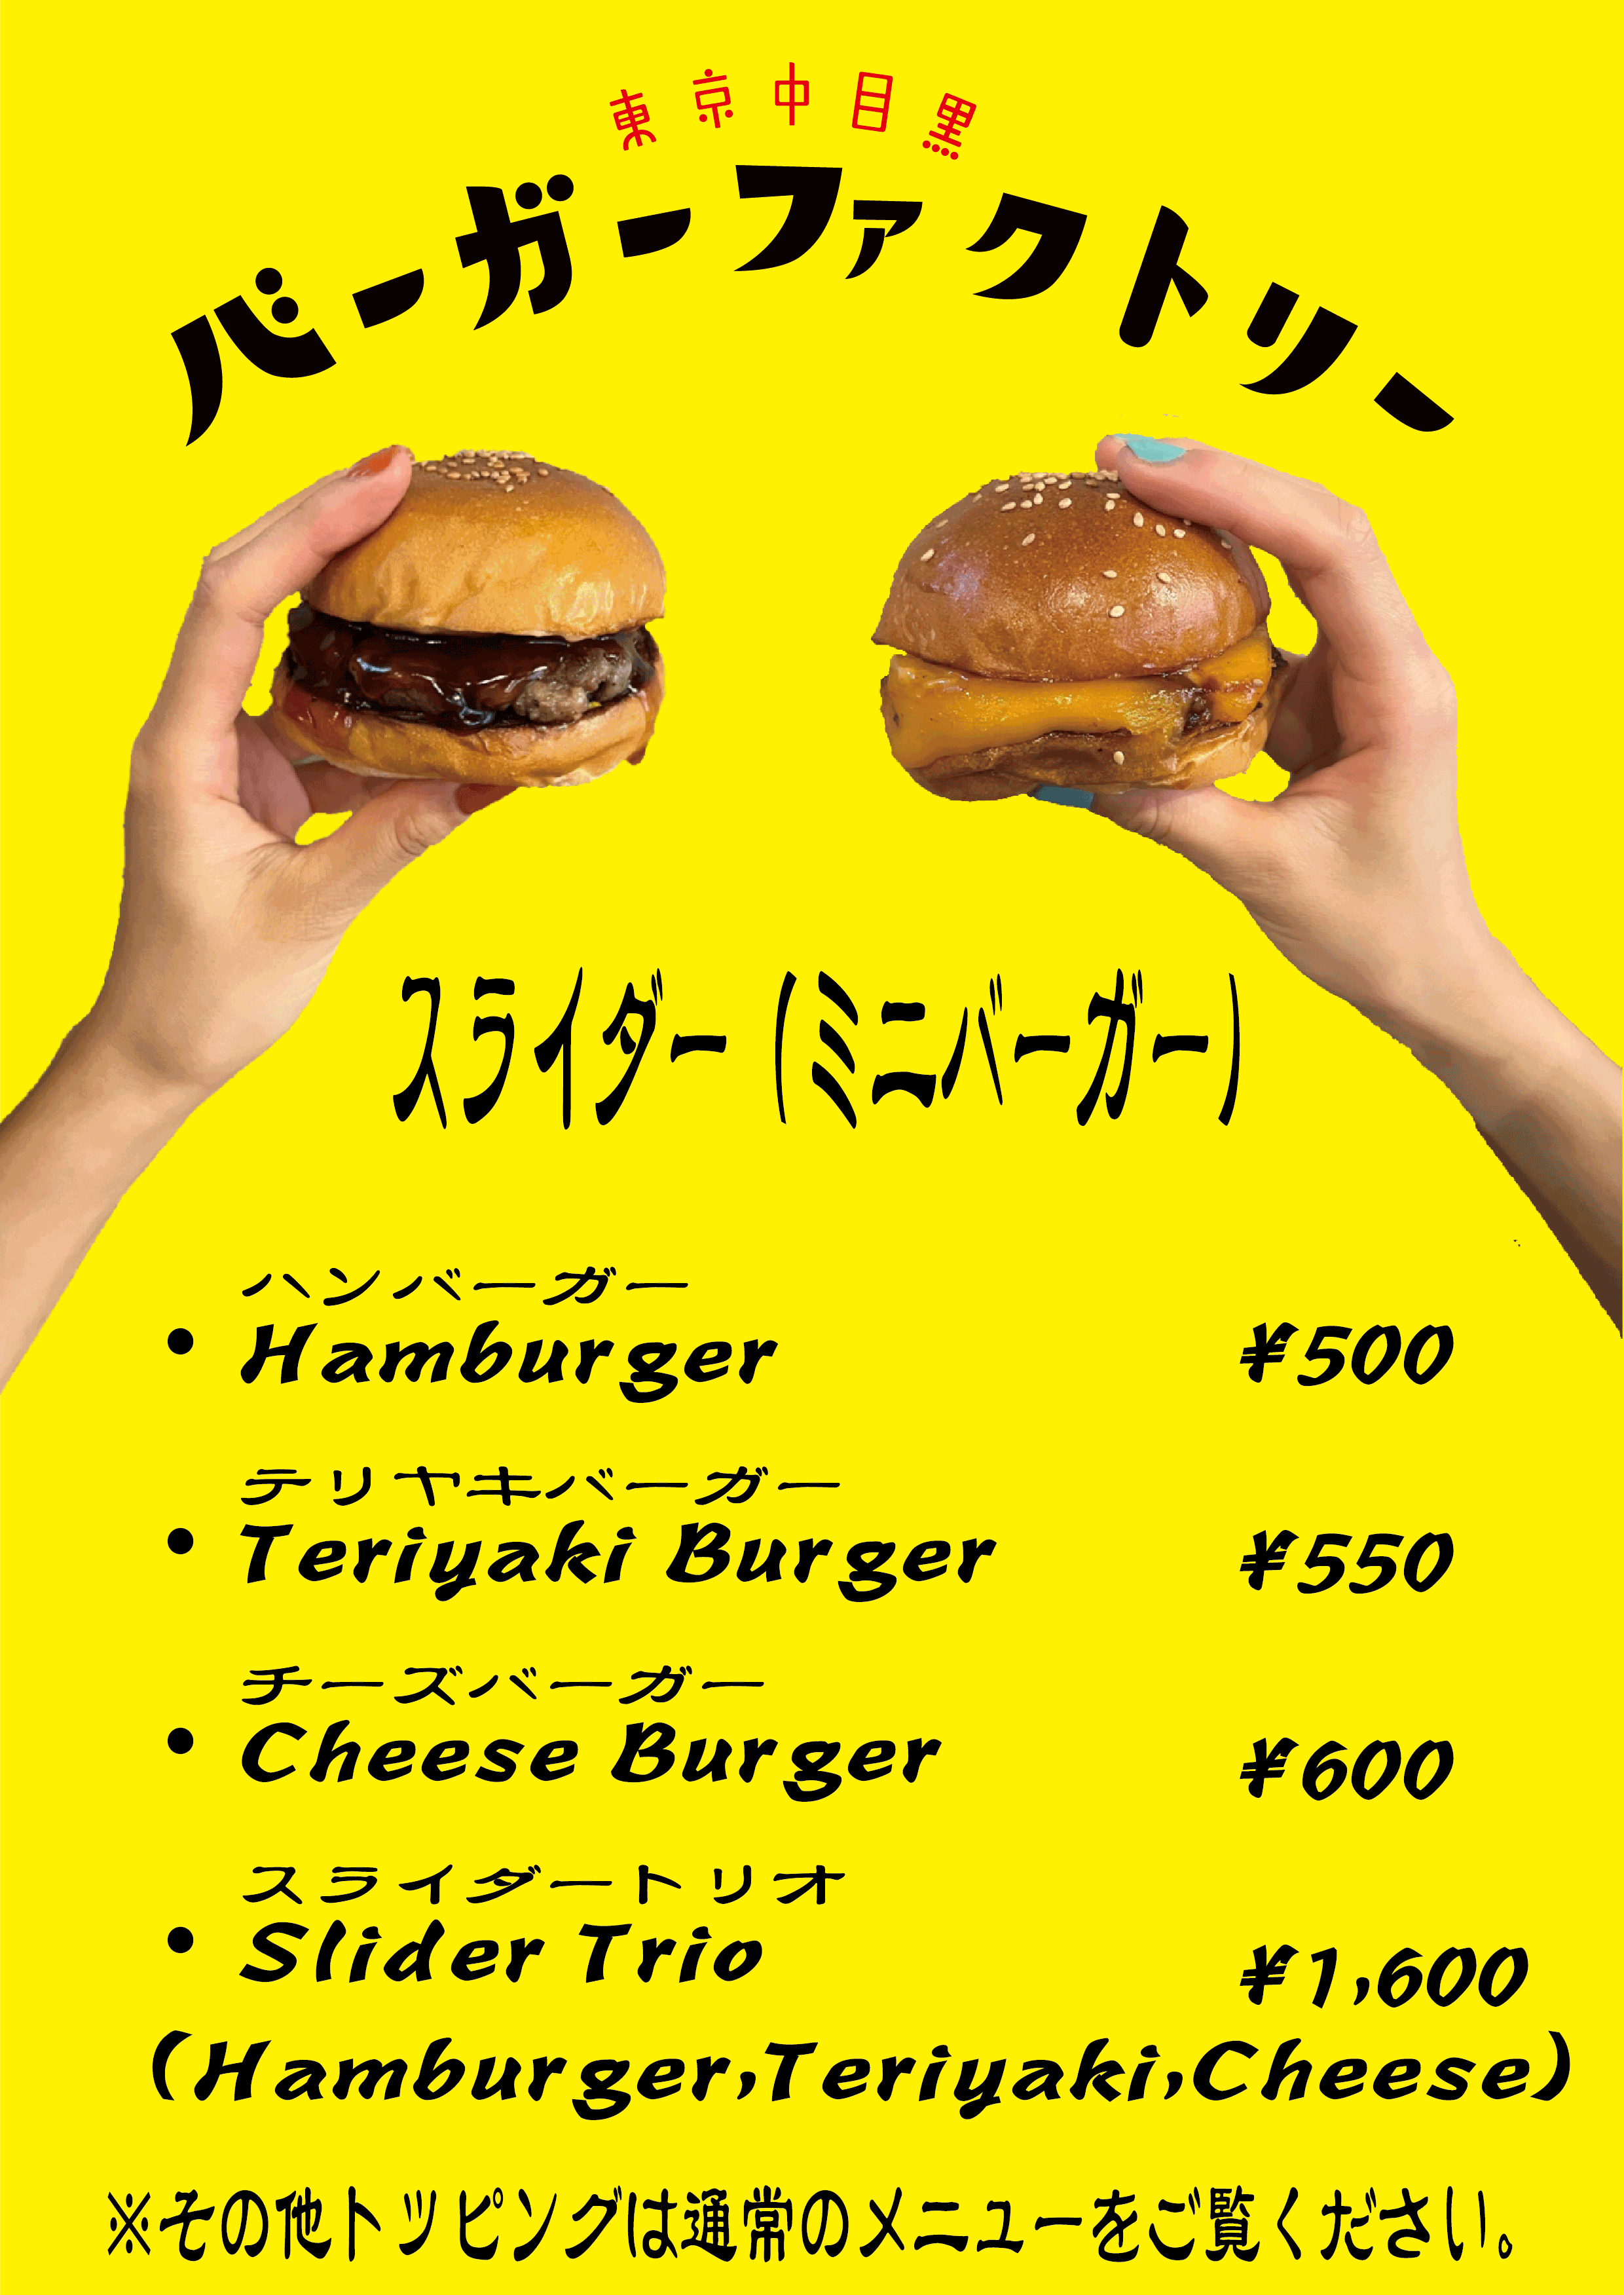 中目黒 Burger Factory